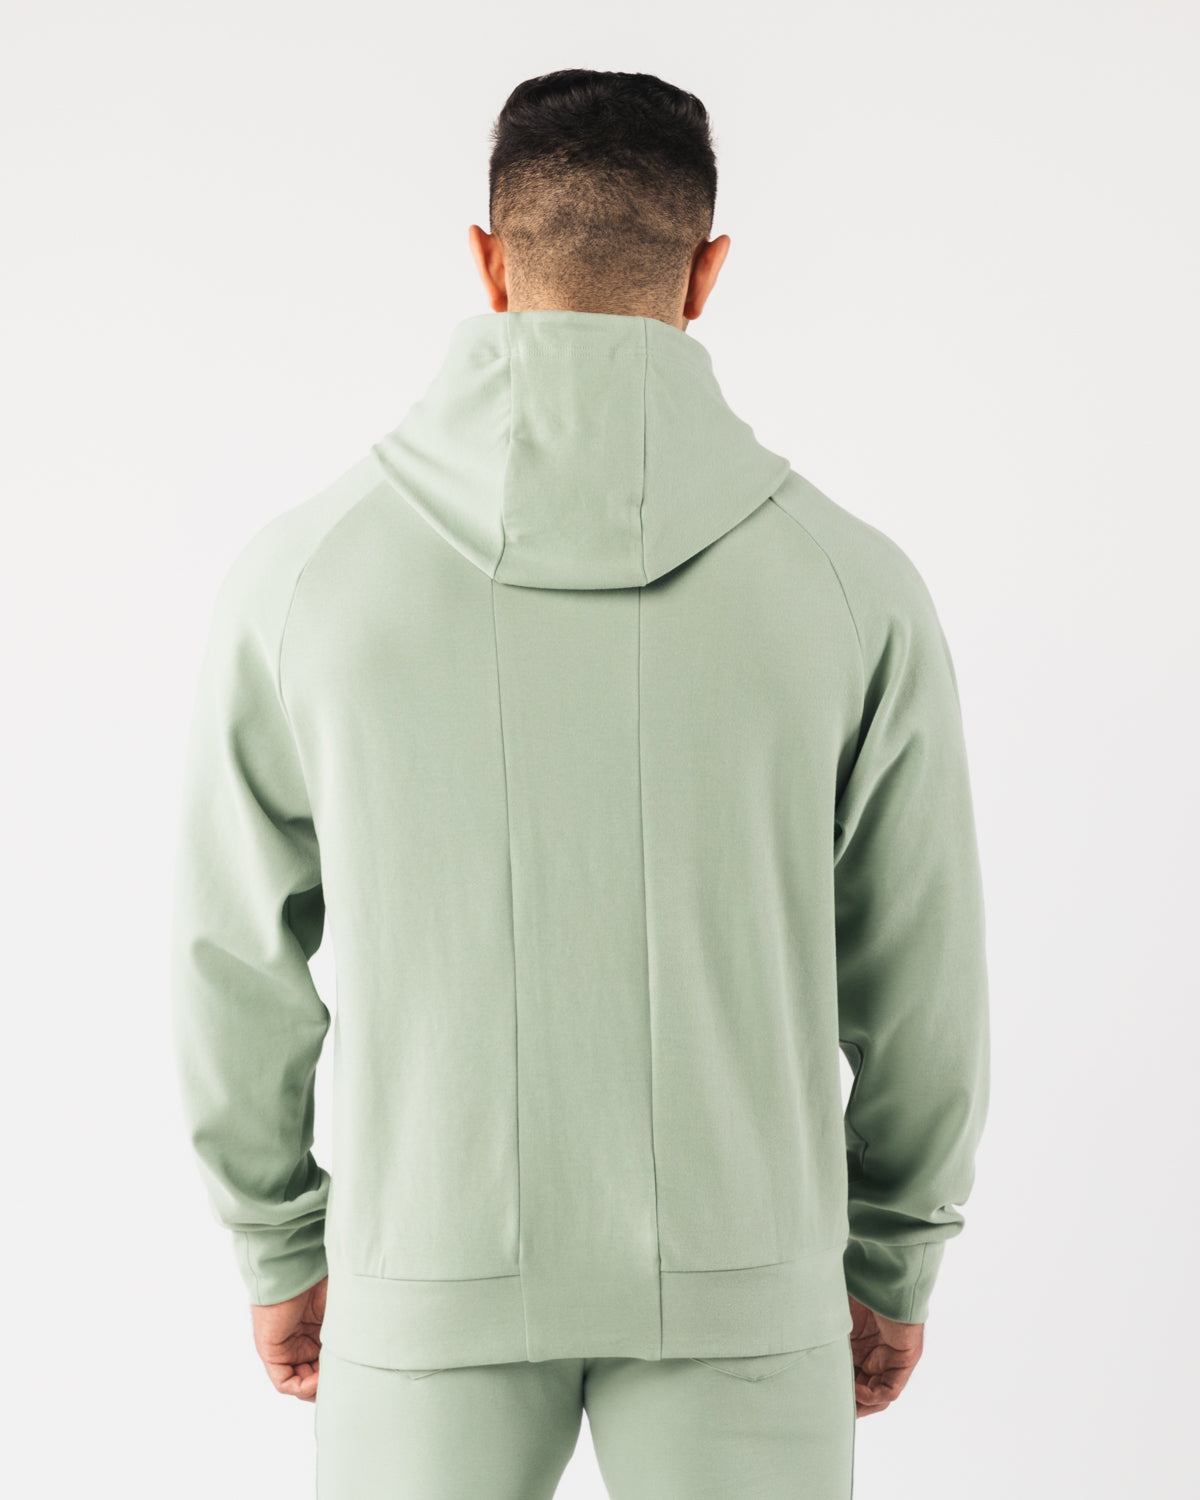 Branded, Stylish and Premium Quality alphalete gym hoodies 